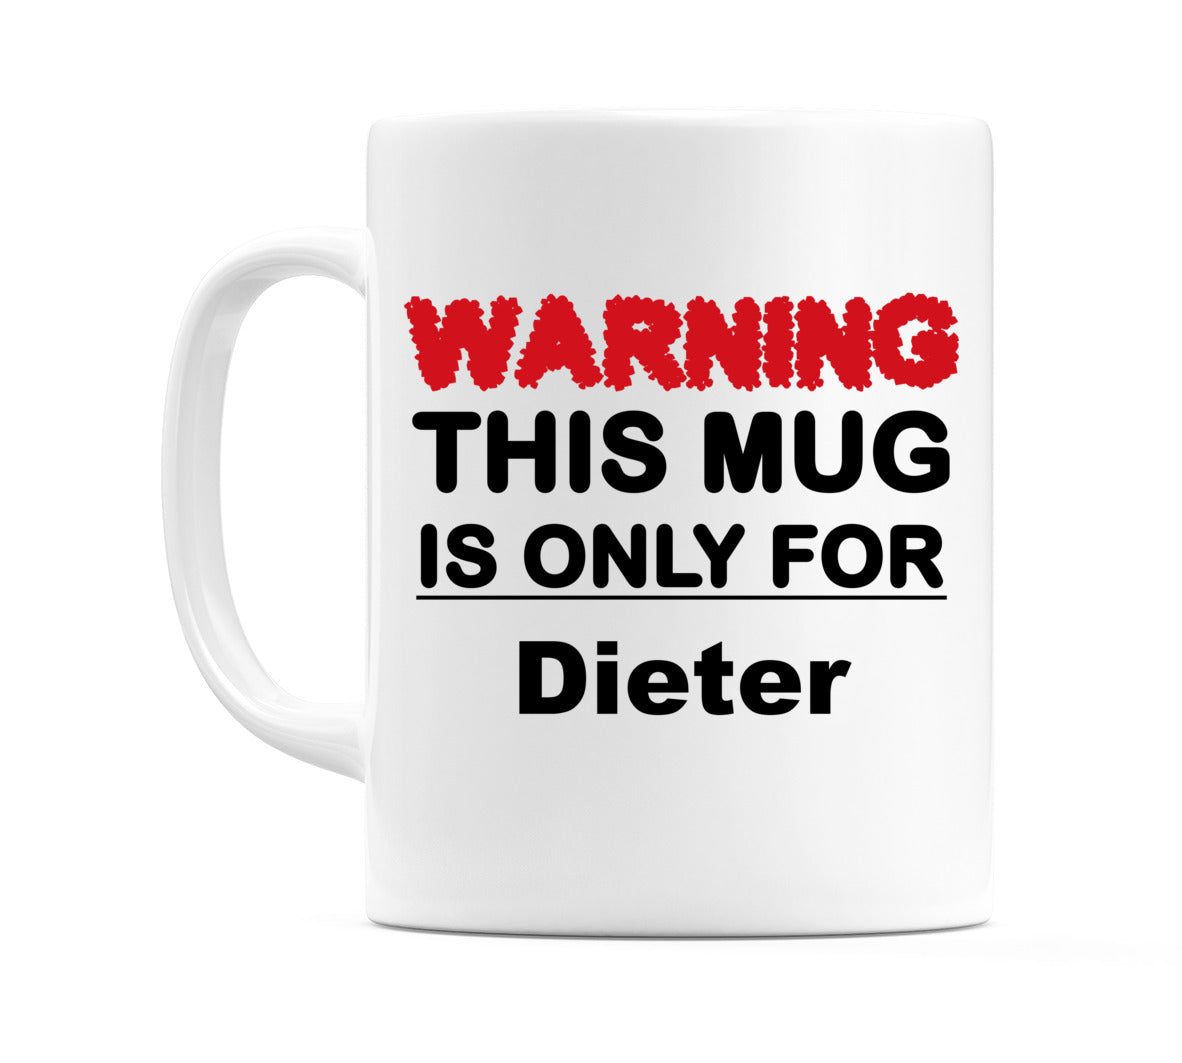 Warning This Mug is ONLY for Dieter Mug